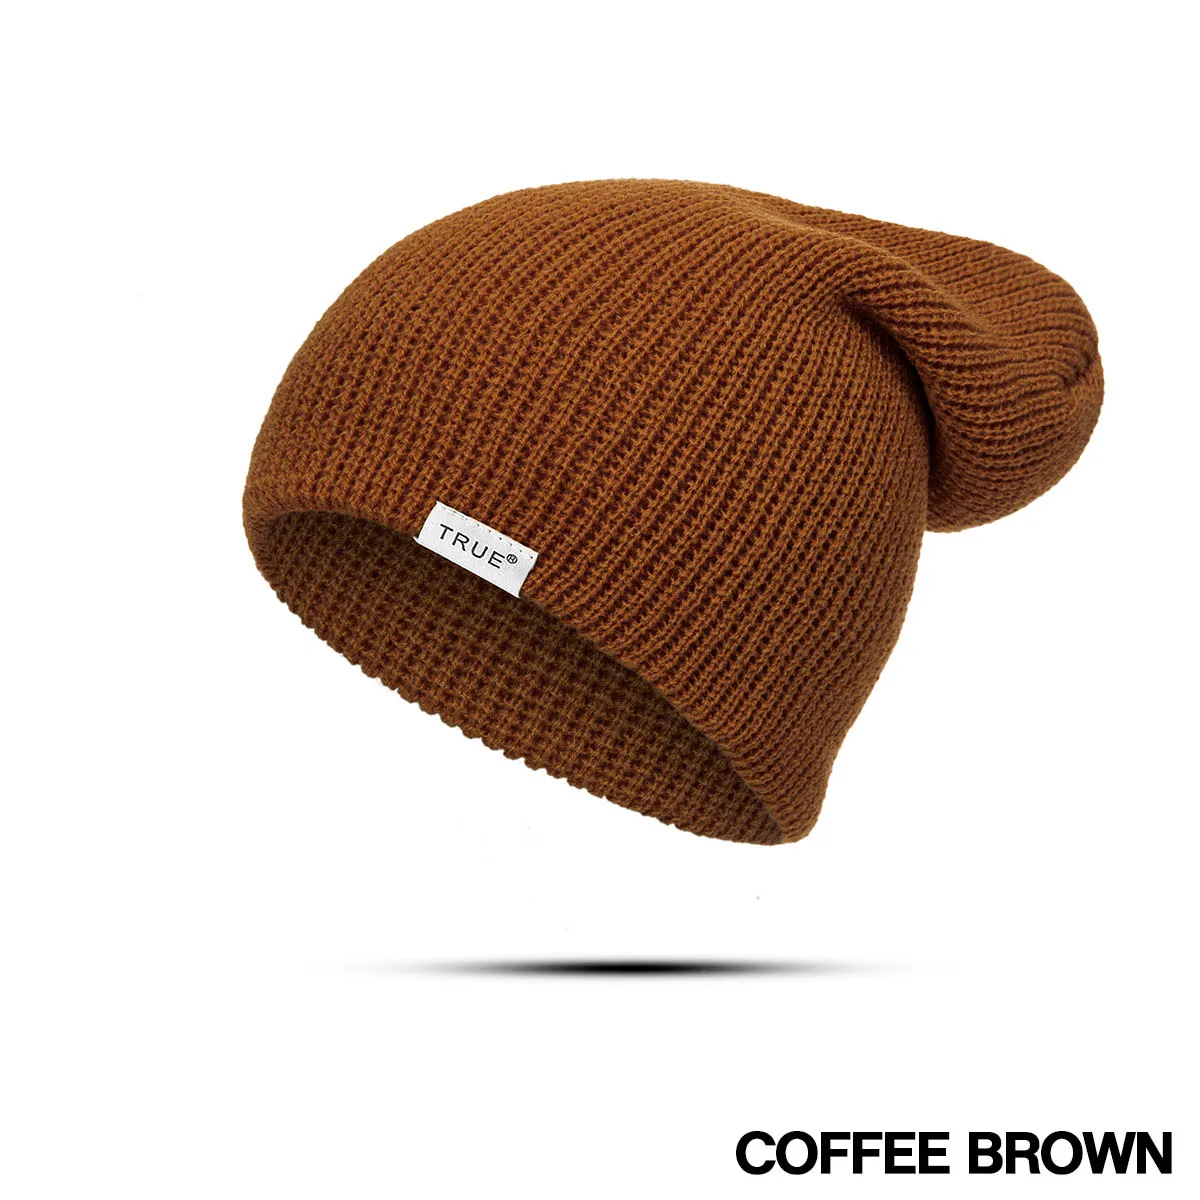 Женская зимняя шапка, Повседневная вязаная одноцветная Мужская Осенняя хип-хоп шапка Skullies, зимняя теплая одежда, шапка, аксессуары - Цвет: coffee